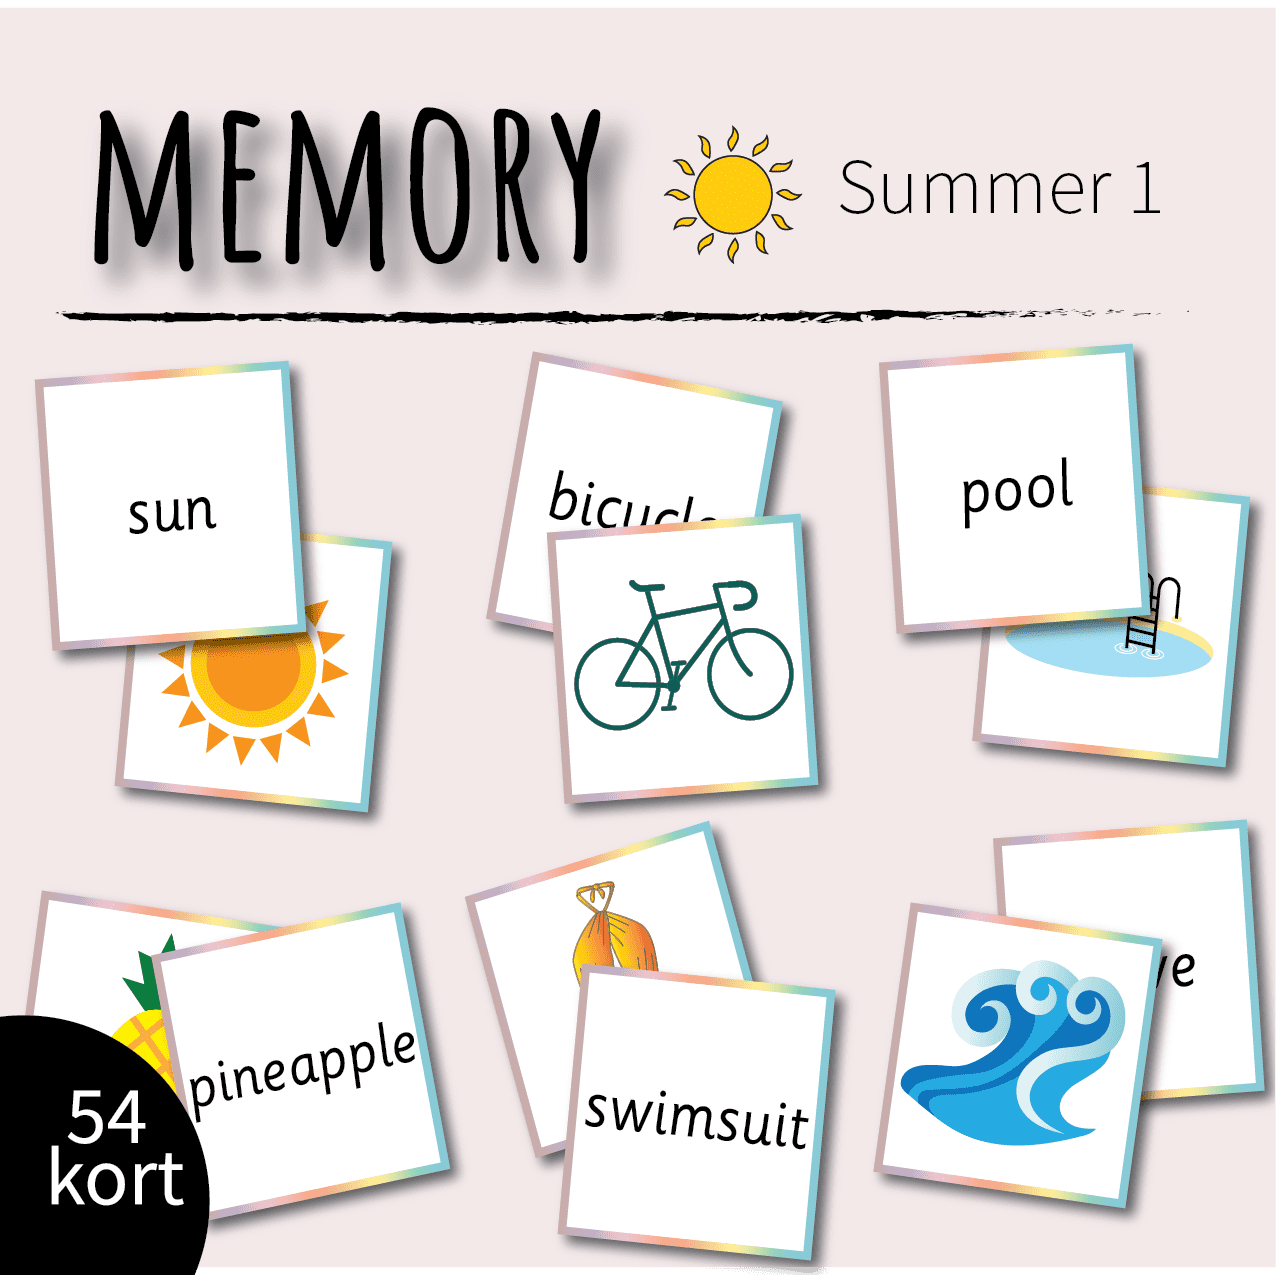 Memory: summer (1)